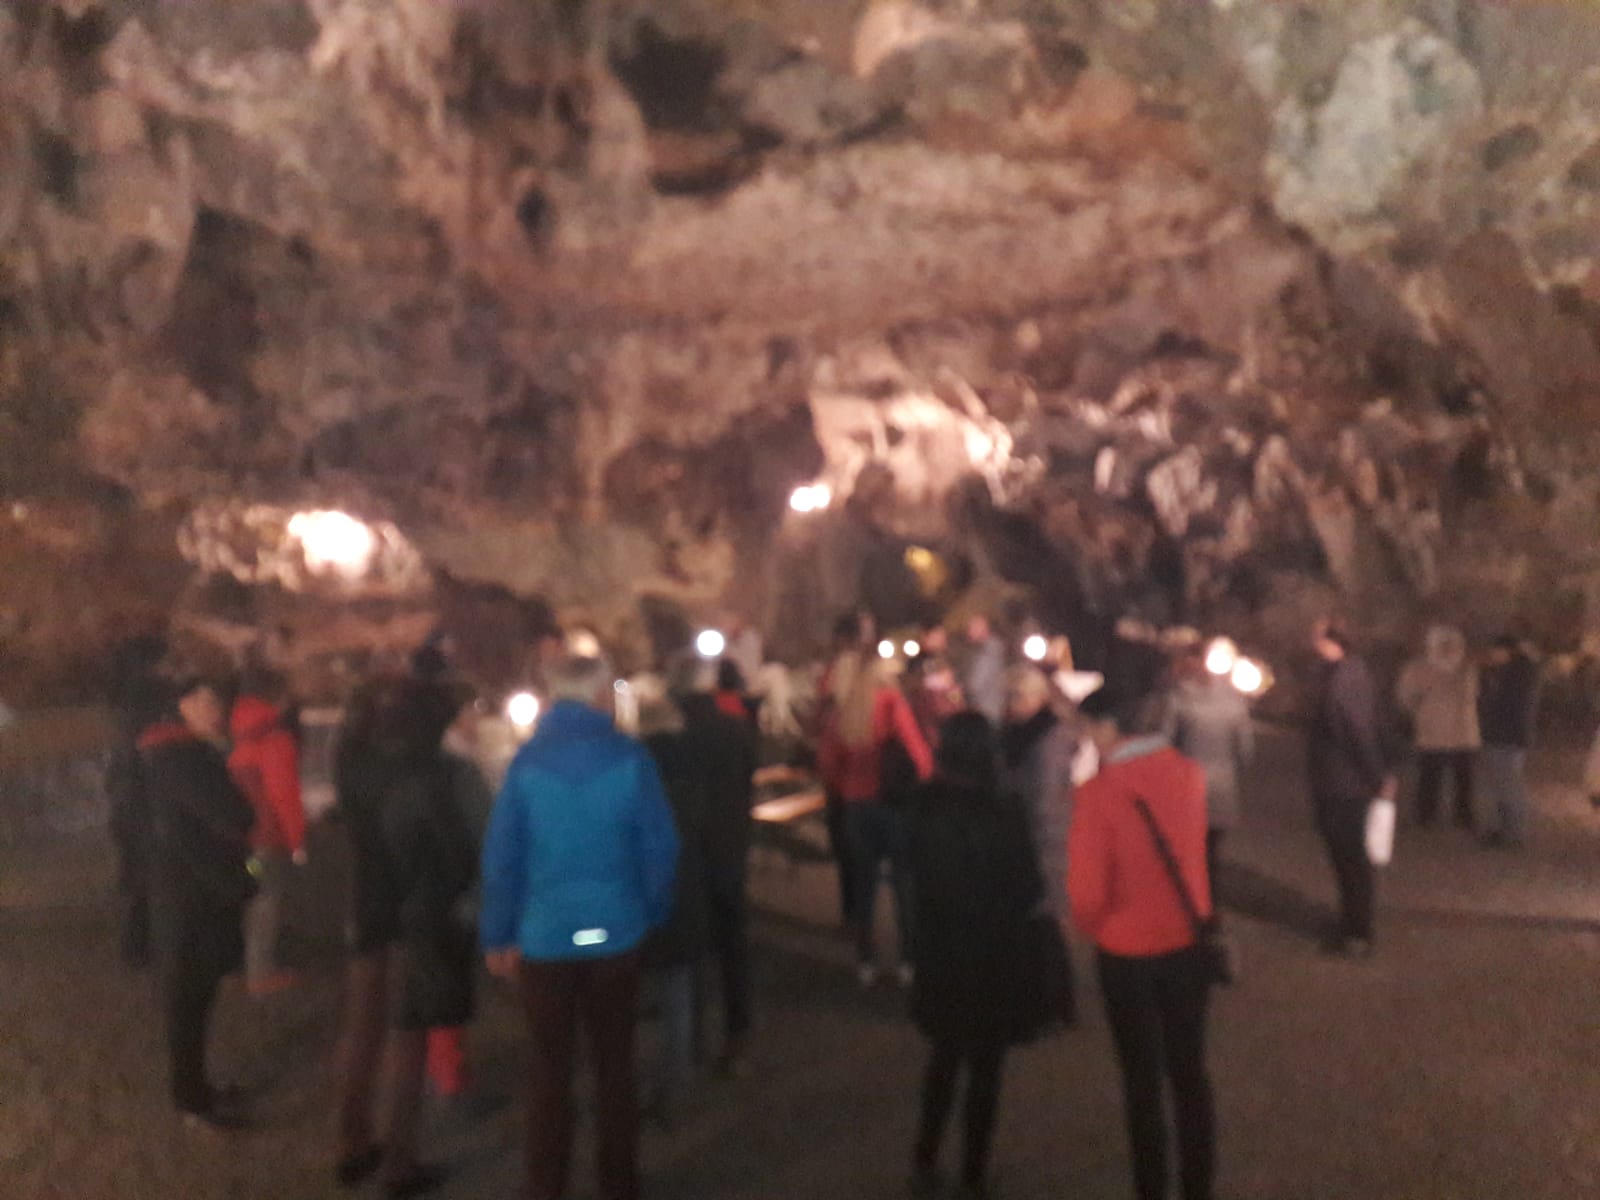 La visita alle grotte di Ostrov u Macochy